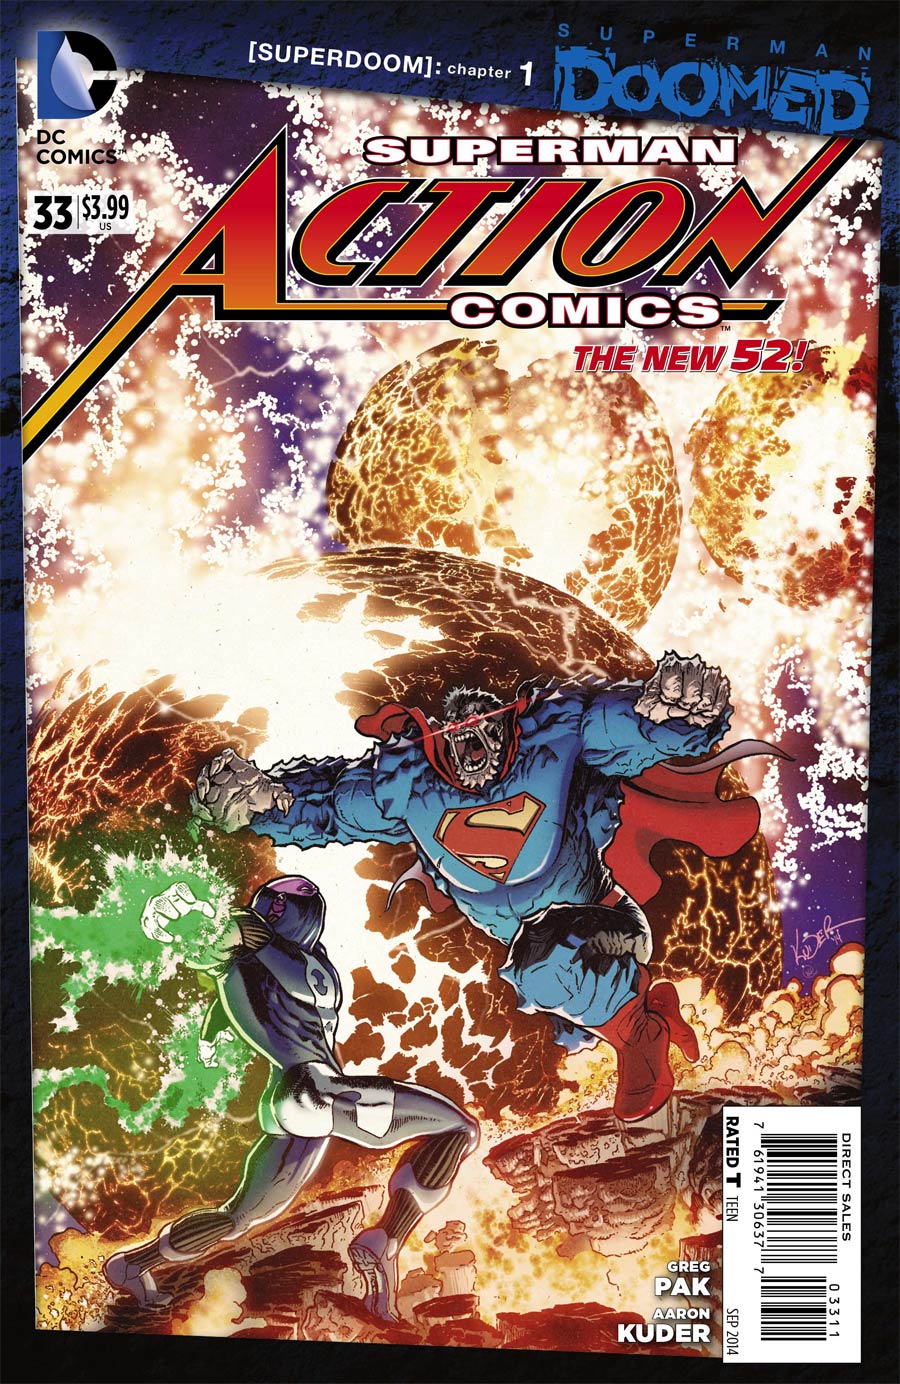 Action Comics Vol 2 #33 Cover A Regular Aaron Kuder Cover (Superman Doomed Tie-In)